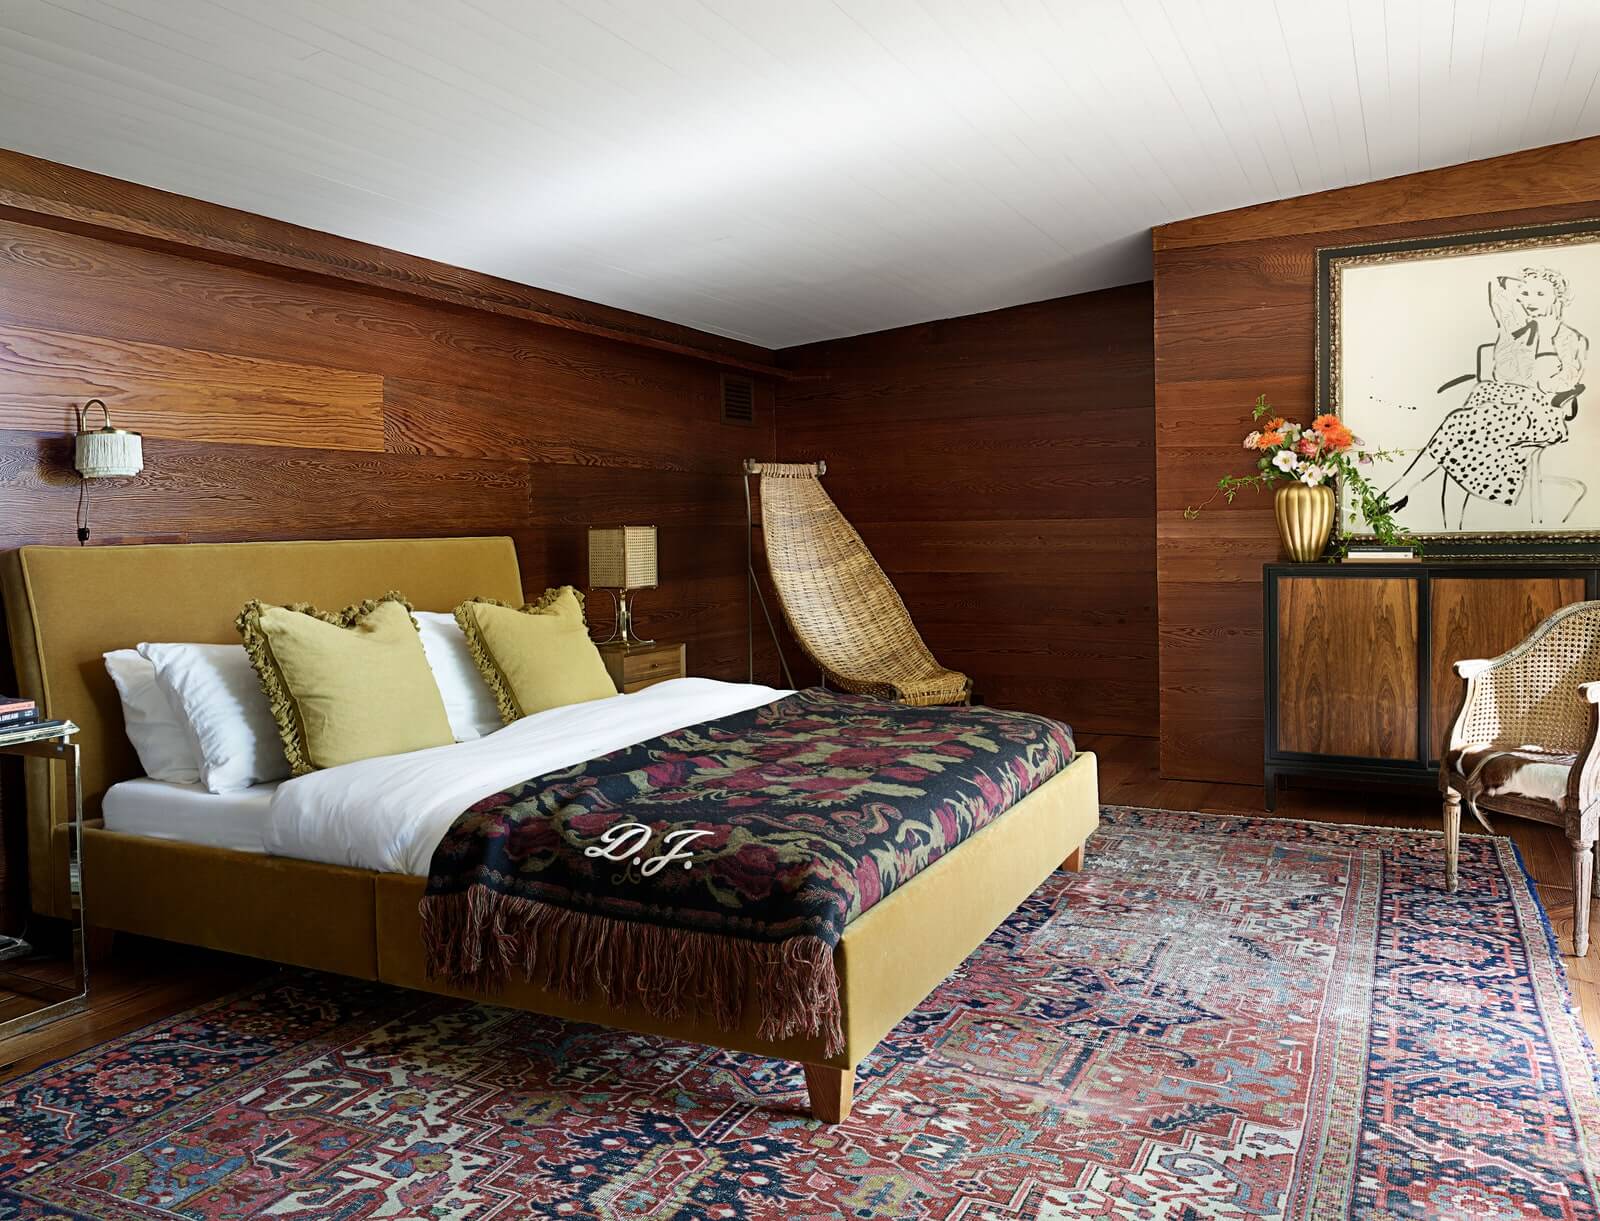 Dakota Johnson’s bedroom featuring a beautiful moroccan rug